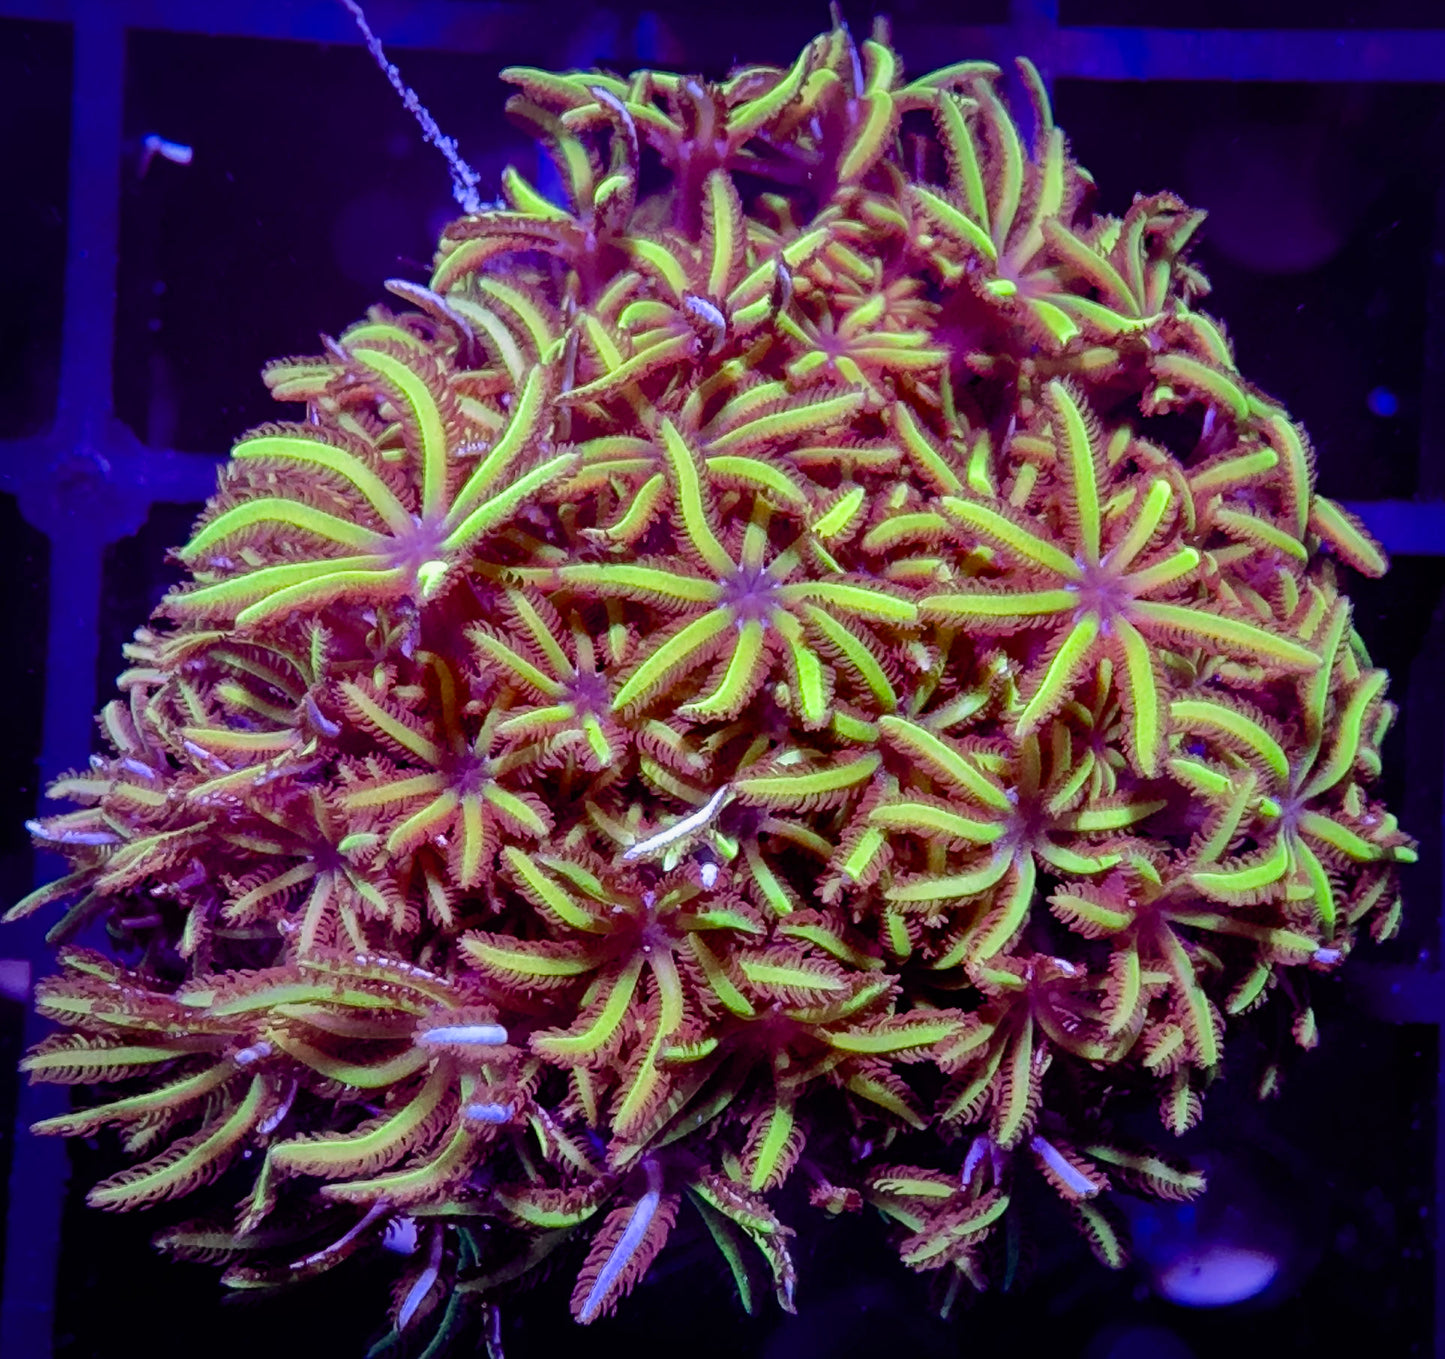 Navy-Eyed Pipe Organ Coral